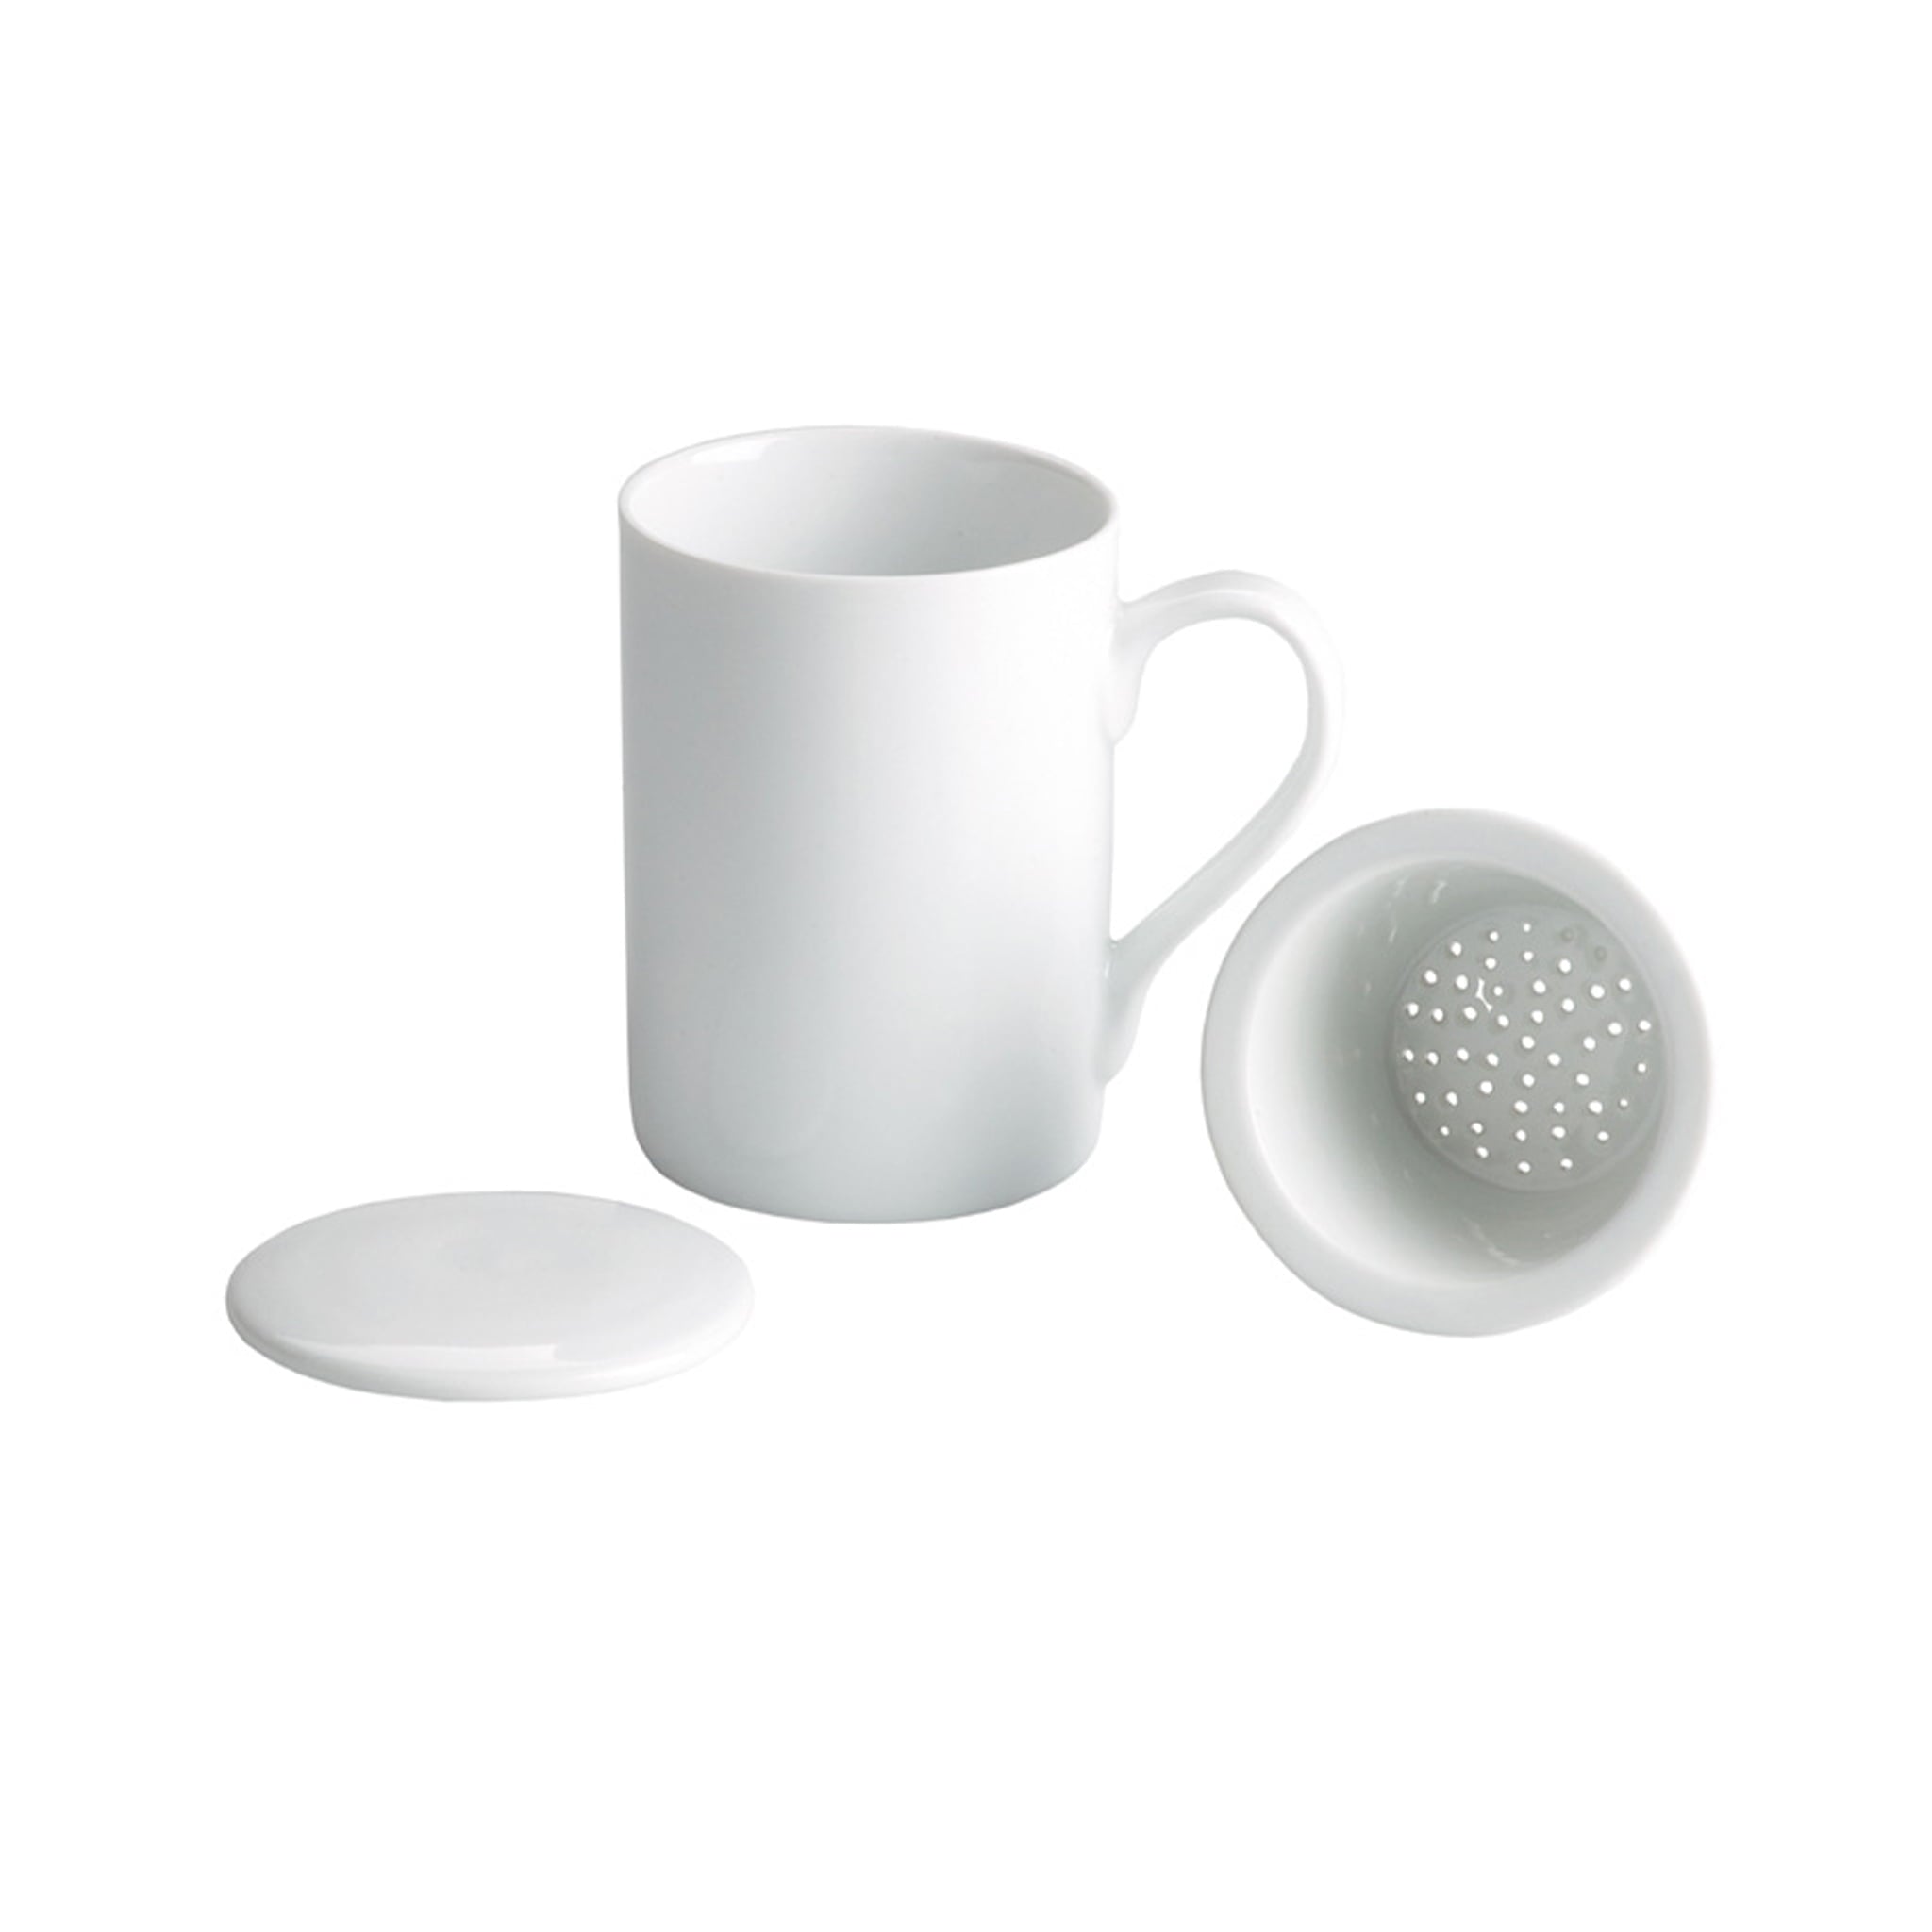 Set of 6 White Porcelain Mug with Tea Strainer, 270ml